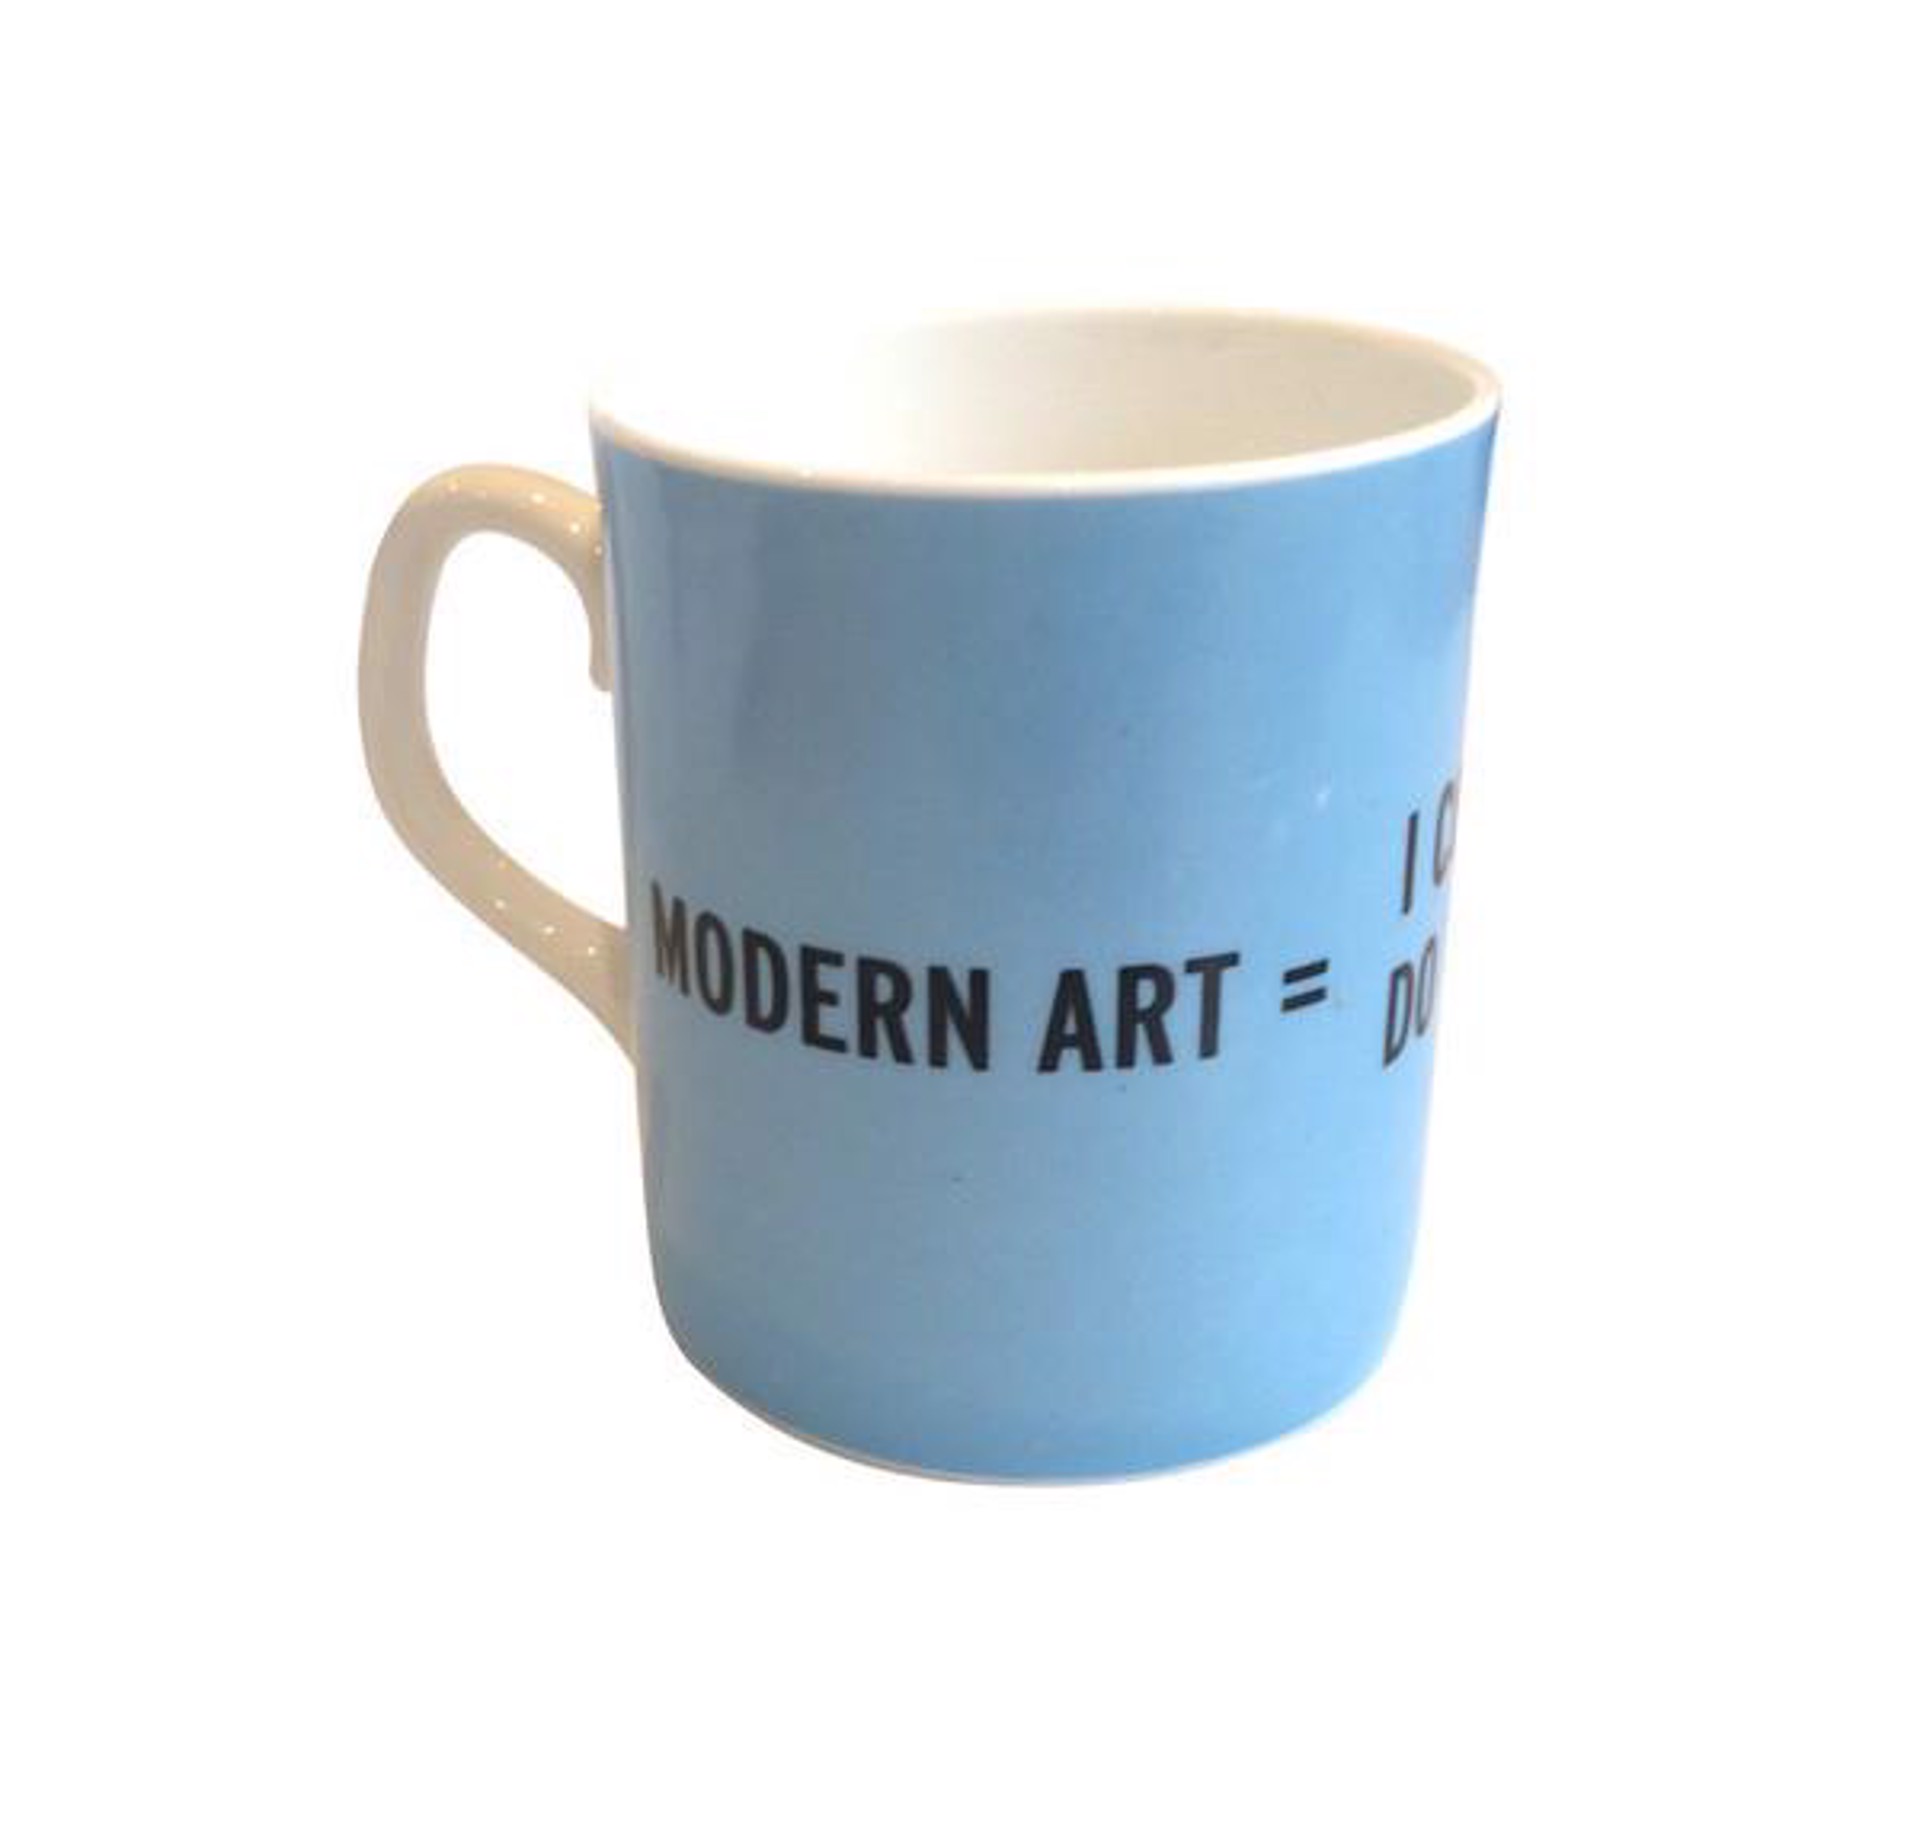 Modern Art Mug by Craig Damrauer